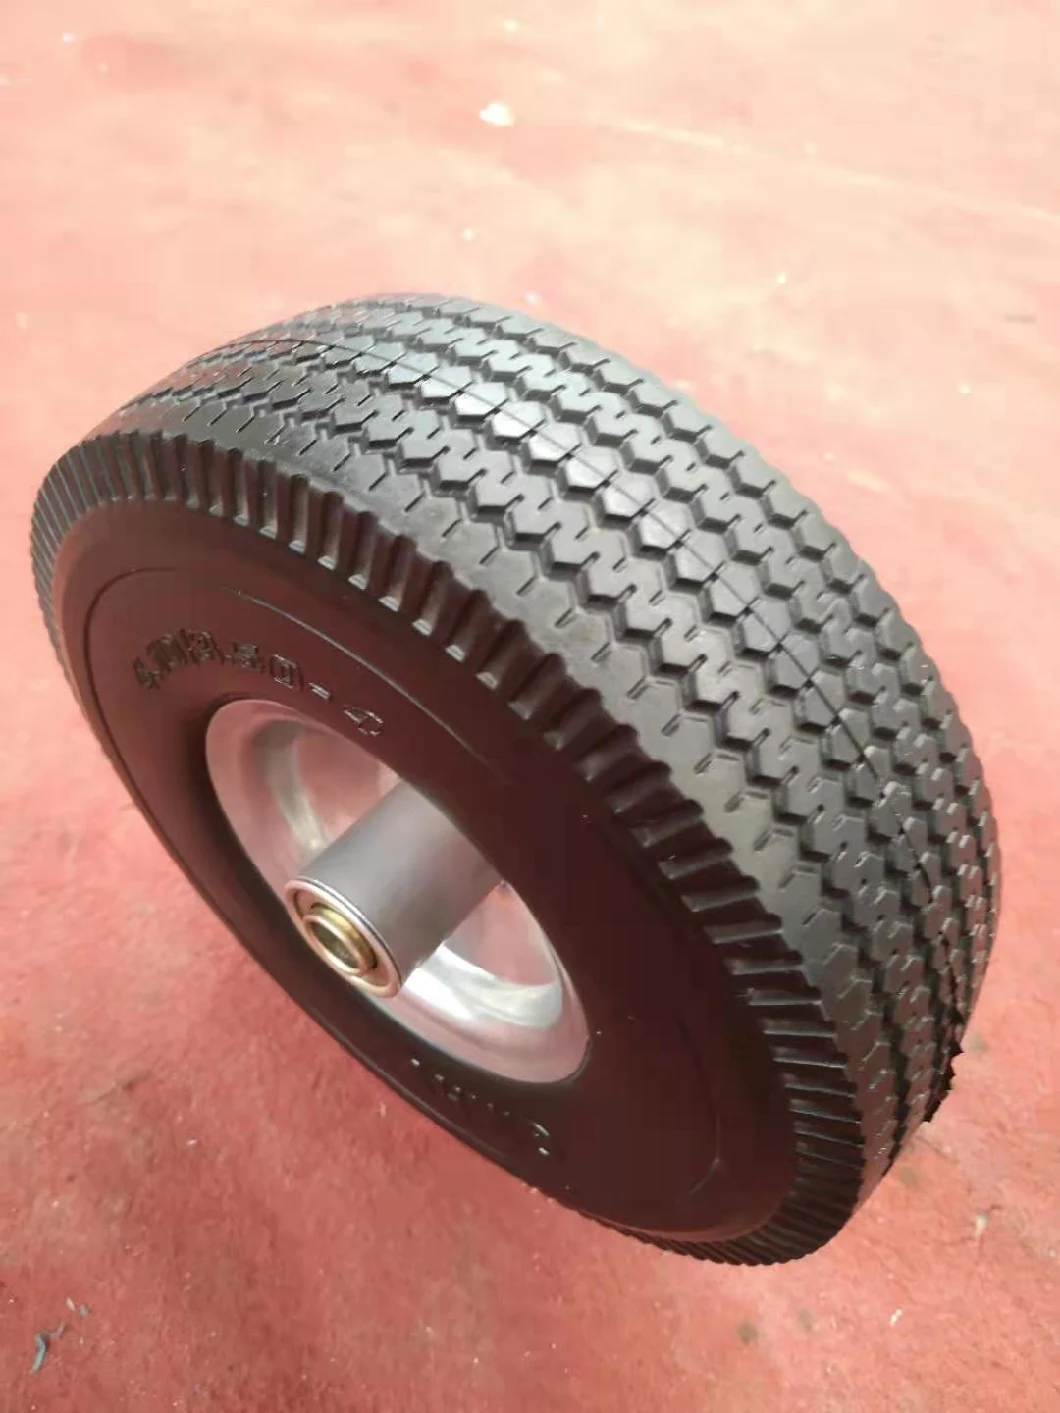 China Tools Cart PU Foam Wheel